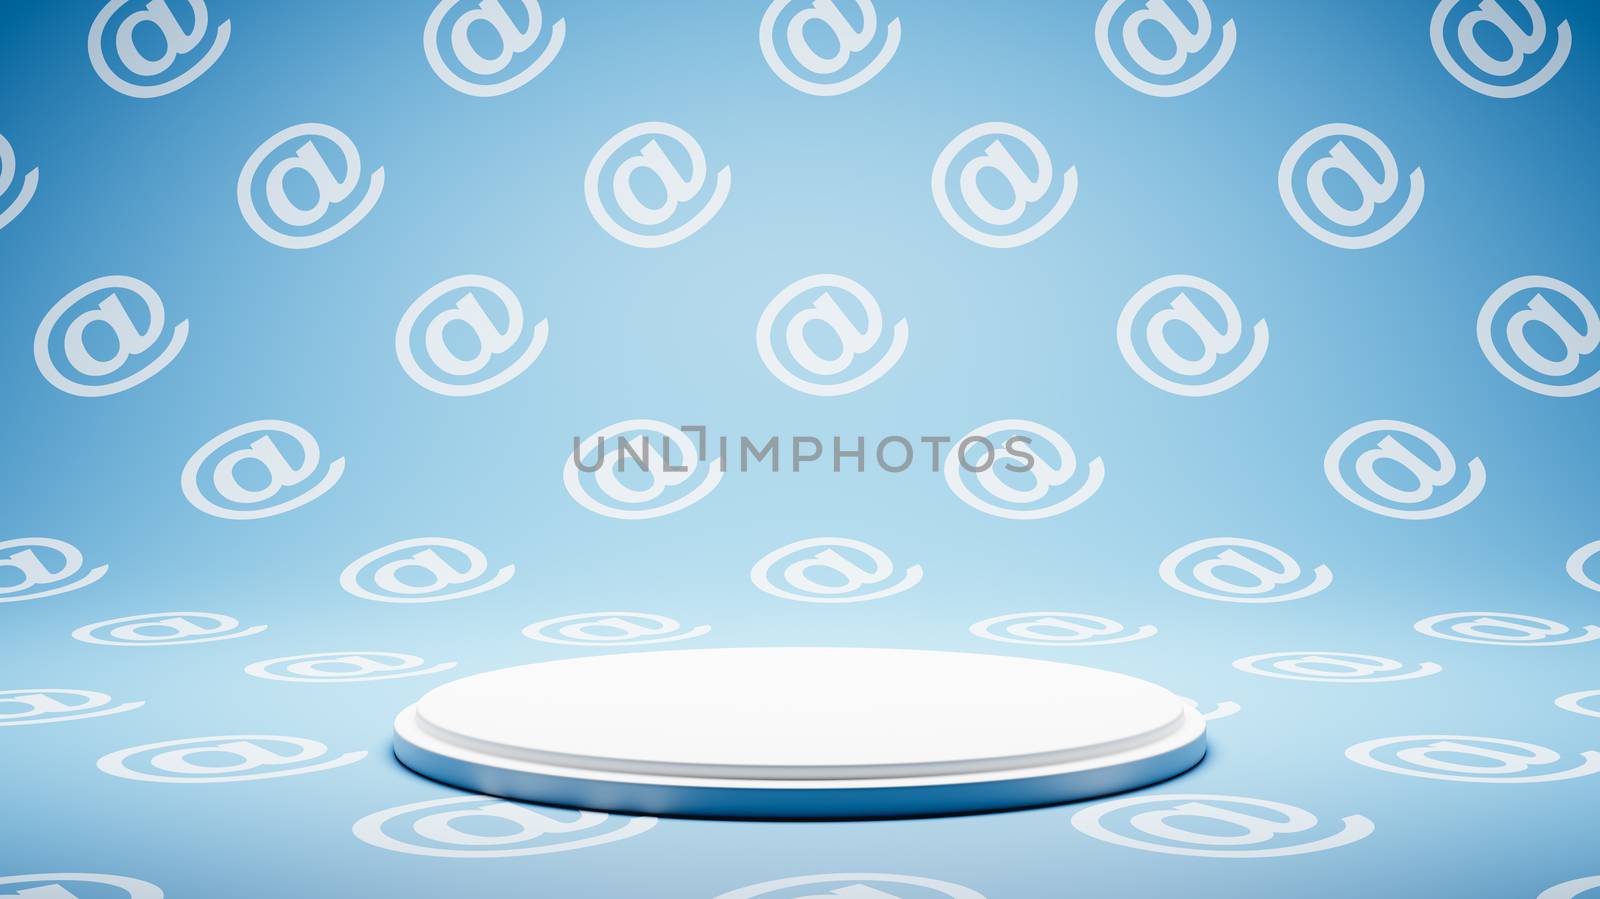 Empty White Platform on Blue and White Email Symbol Pattern Studio Background 3D Render Illustration